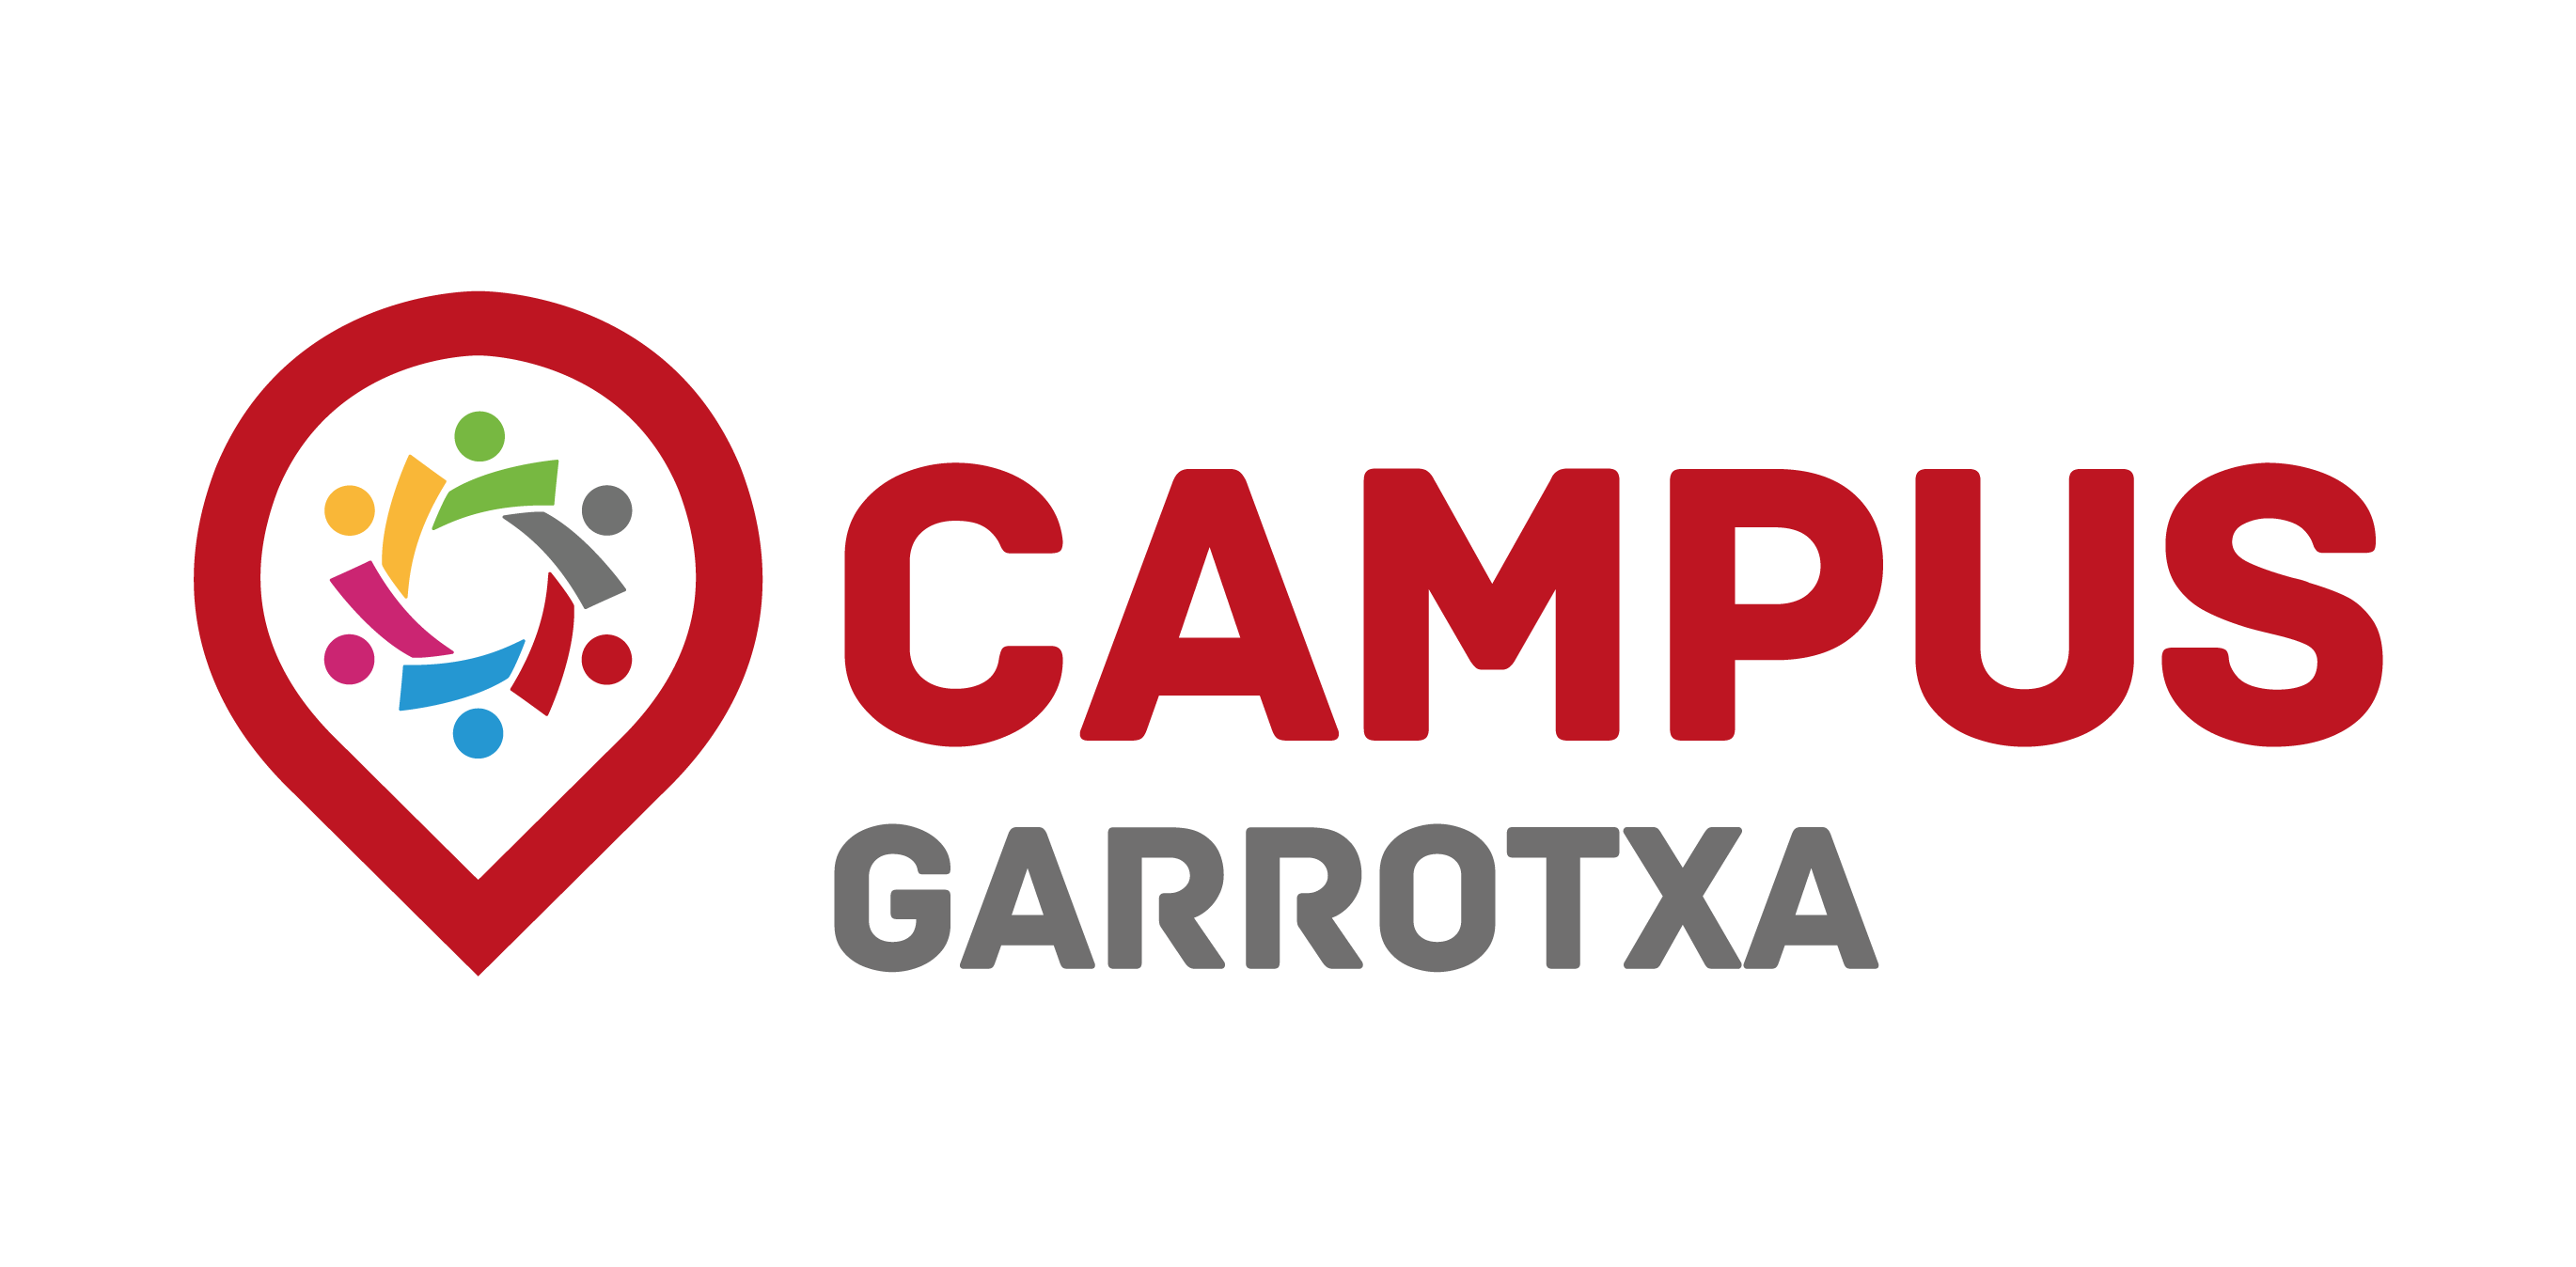 Campus Garrotxa